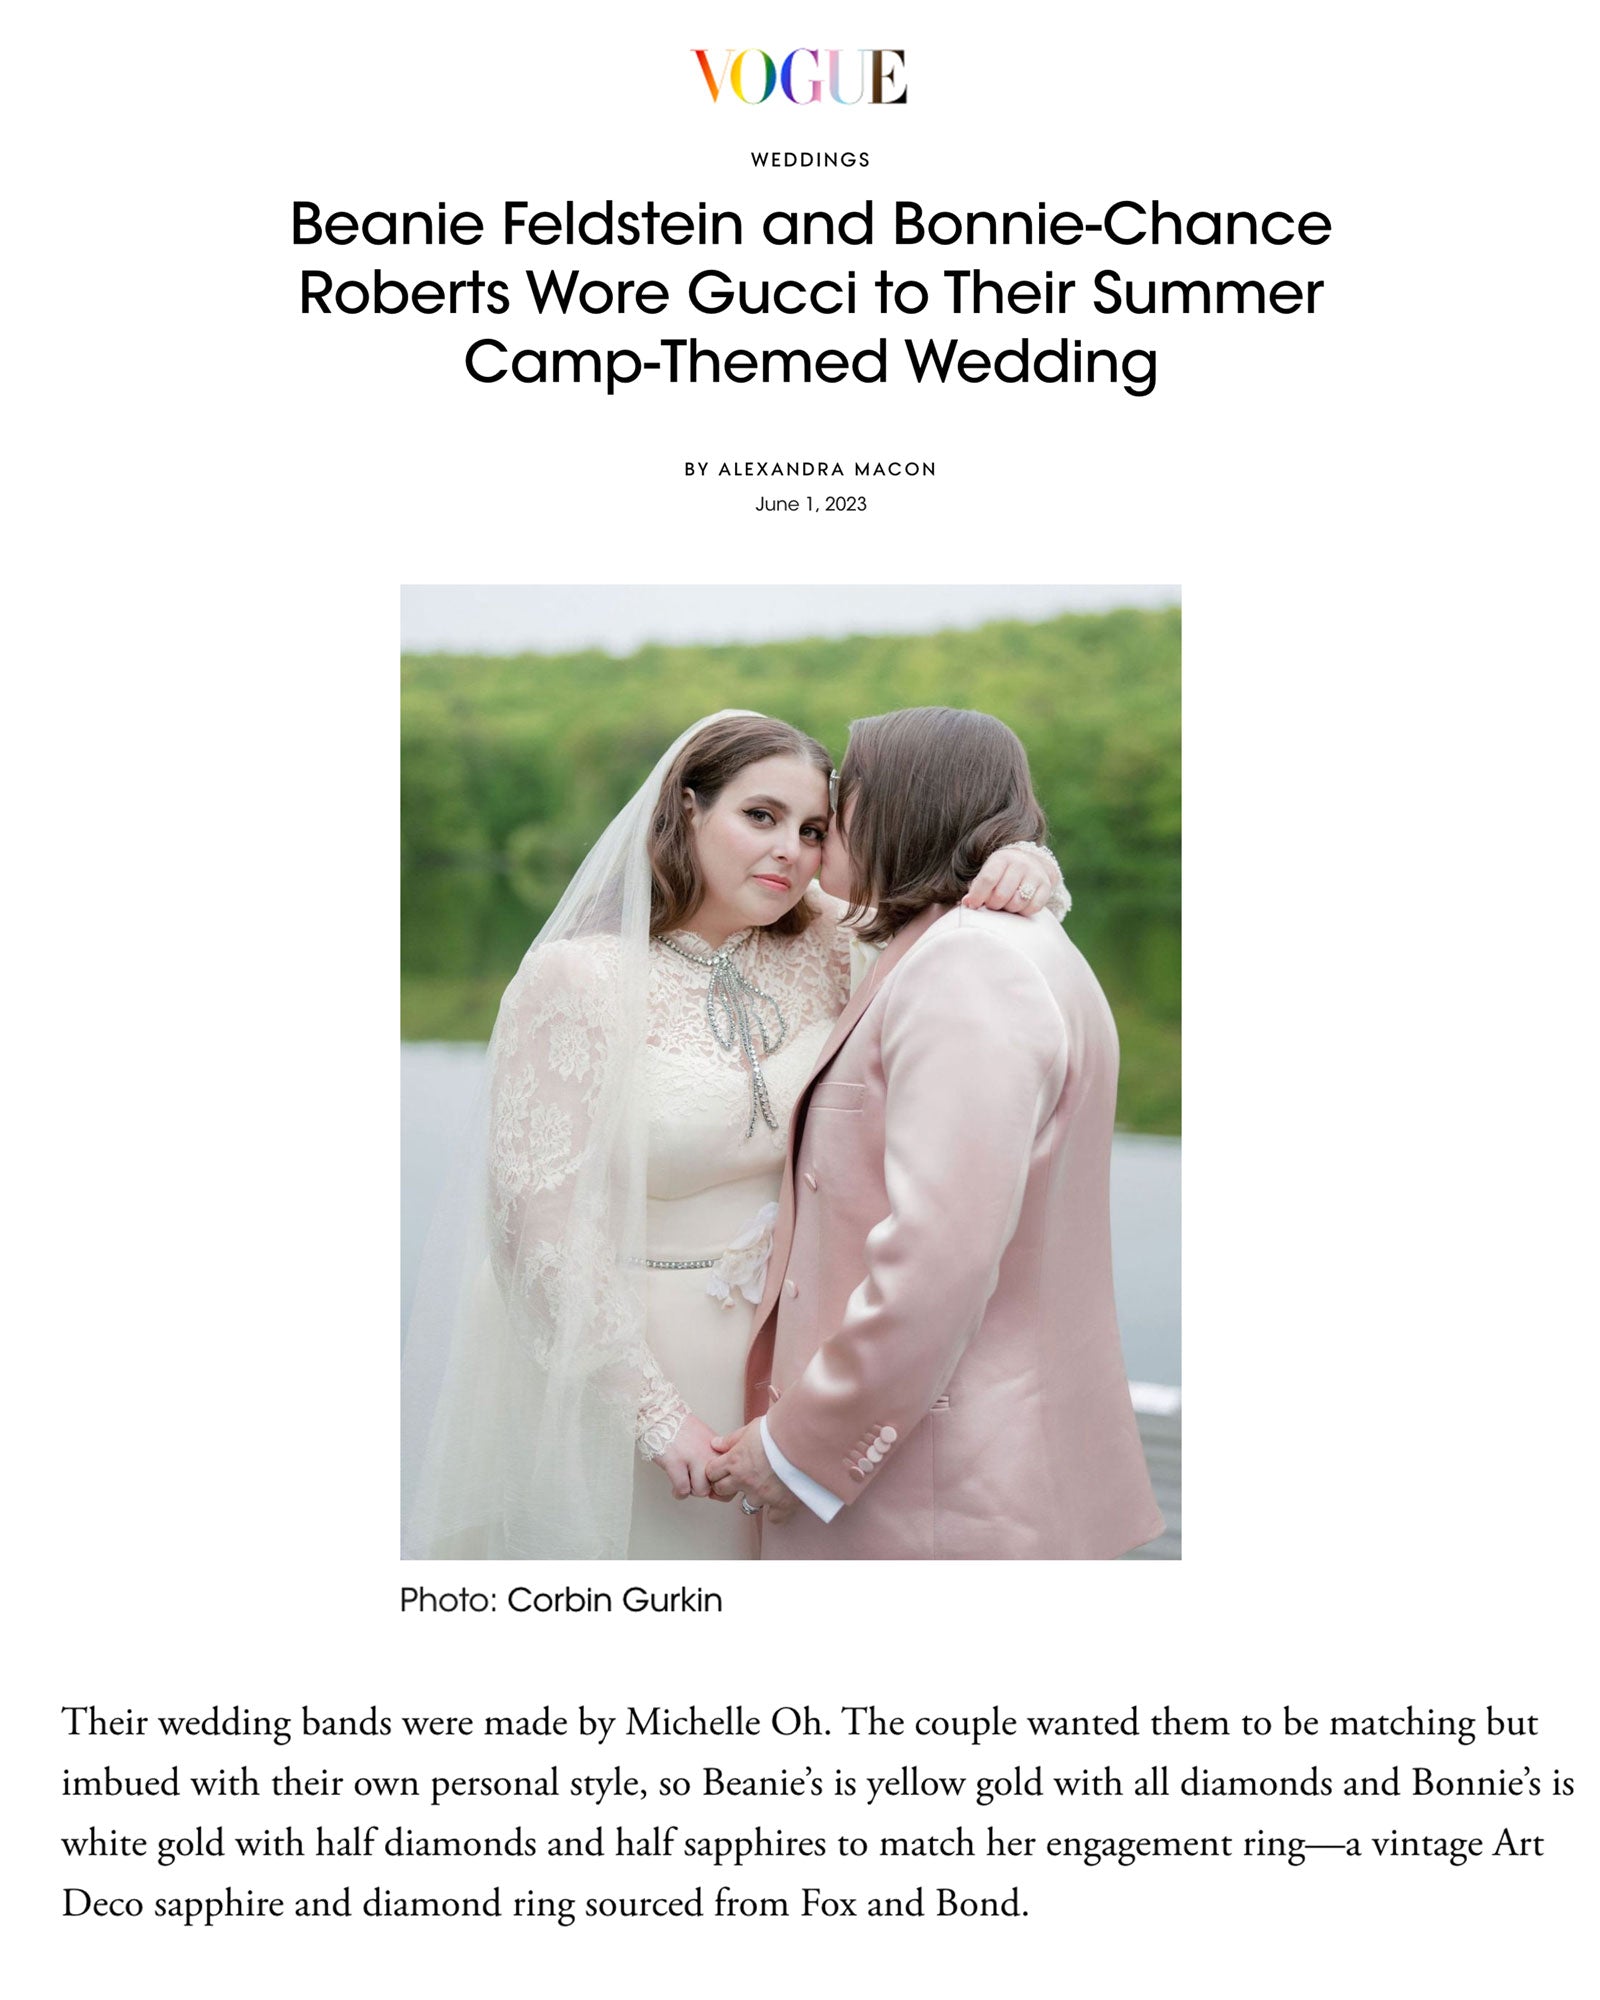 VOGUE: Beanie Feldstein and Bonnie-Chance Roberts Wore Gucci to Their Summer Camp-Themed Wedding